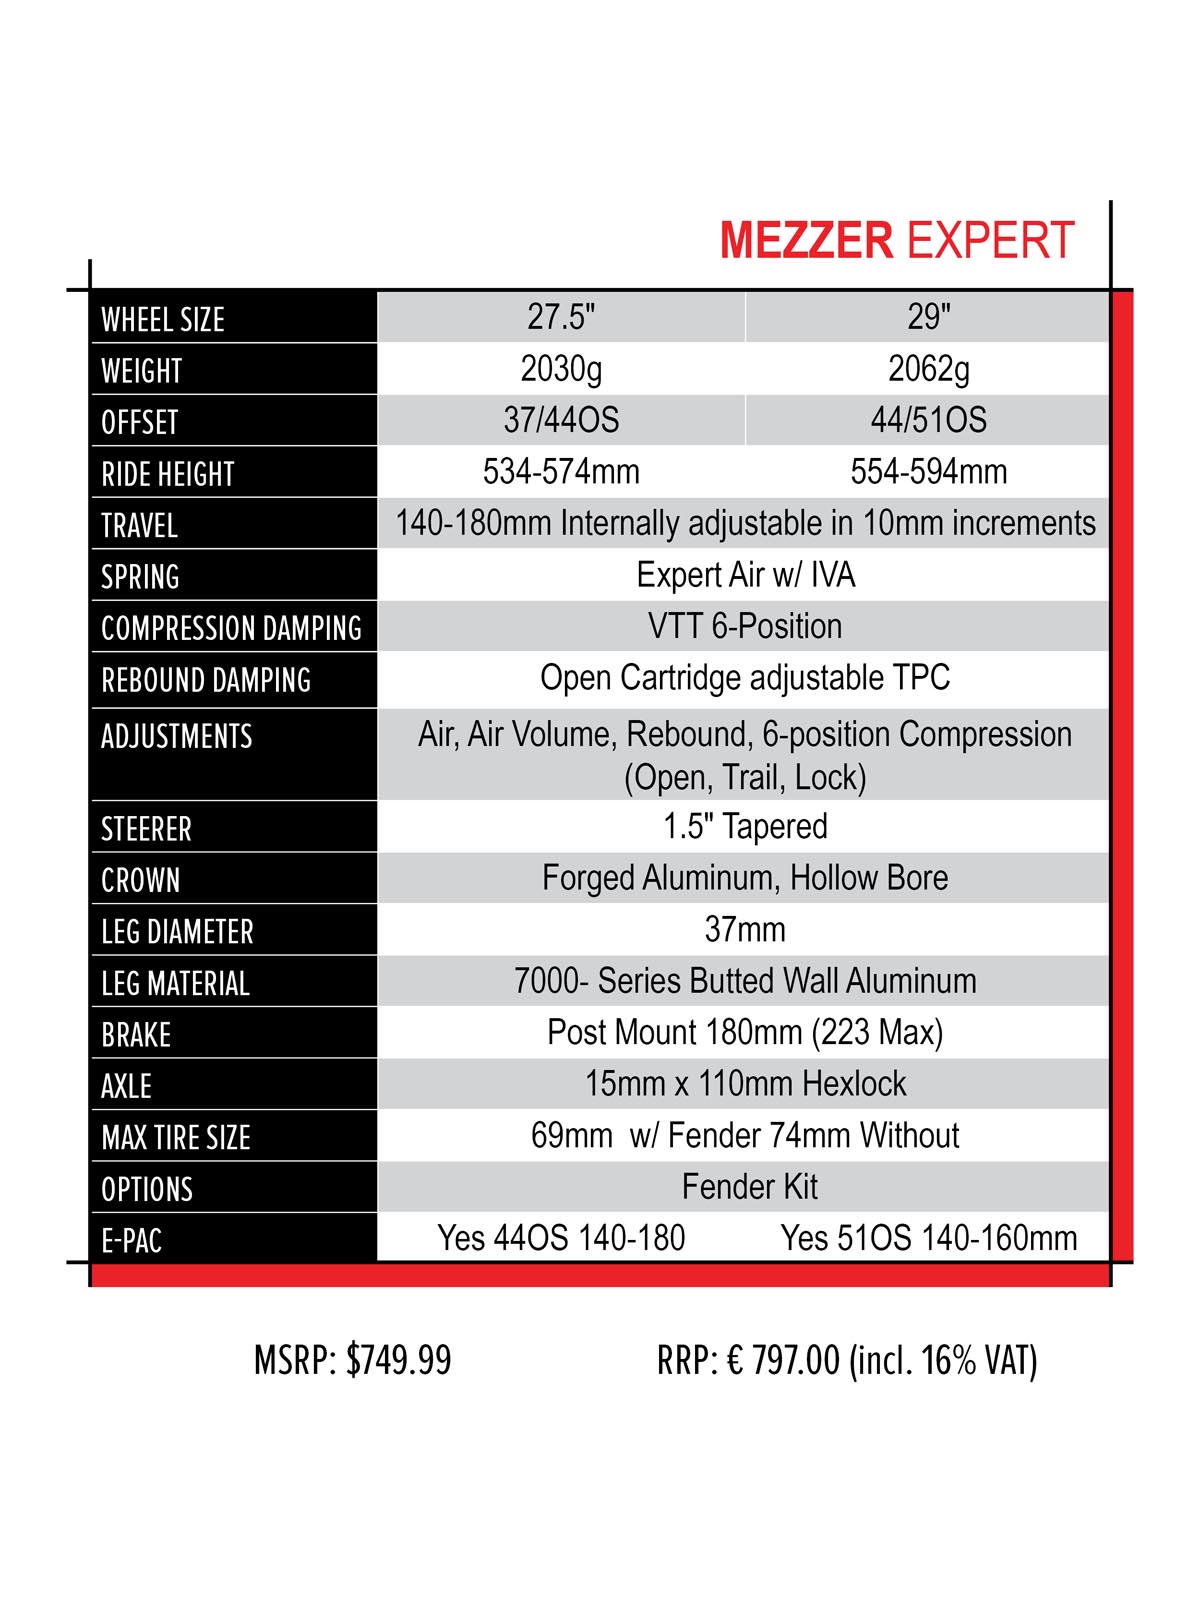 MAnitou Mezzer Expert suspension fork specs